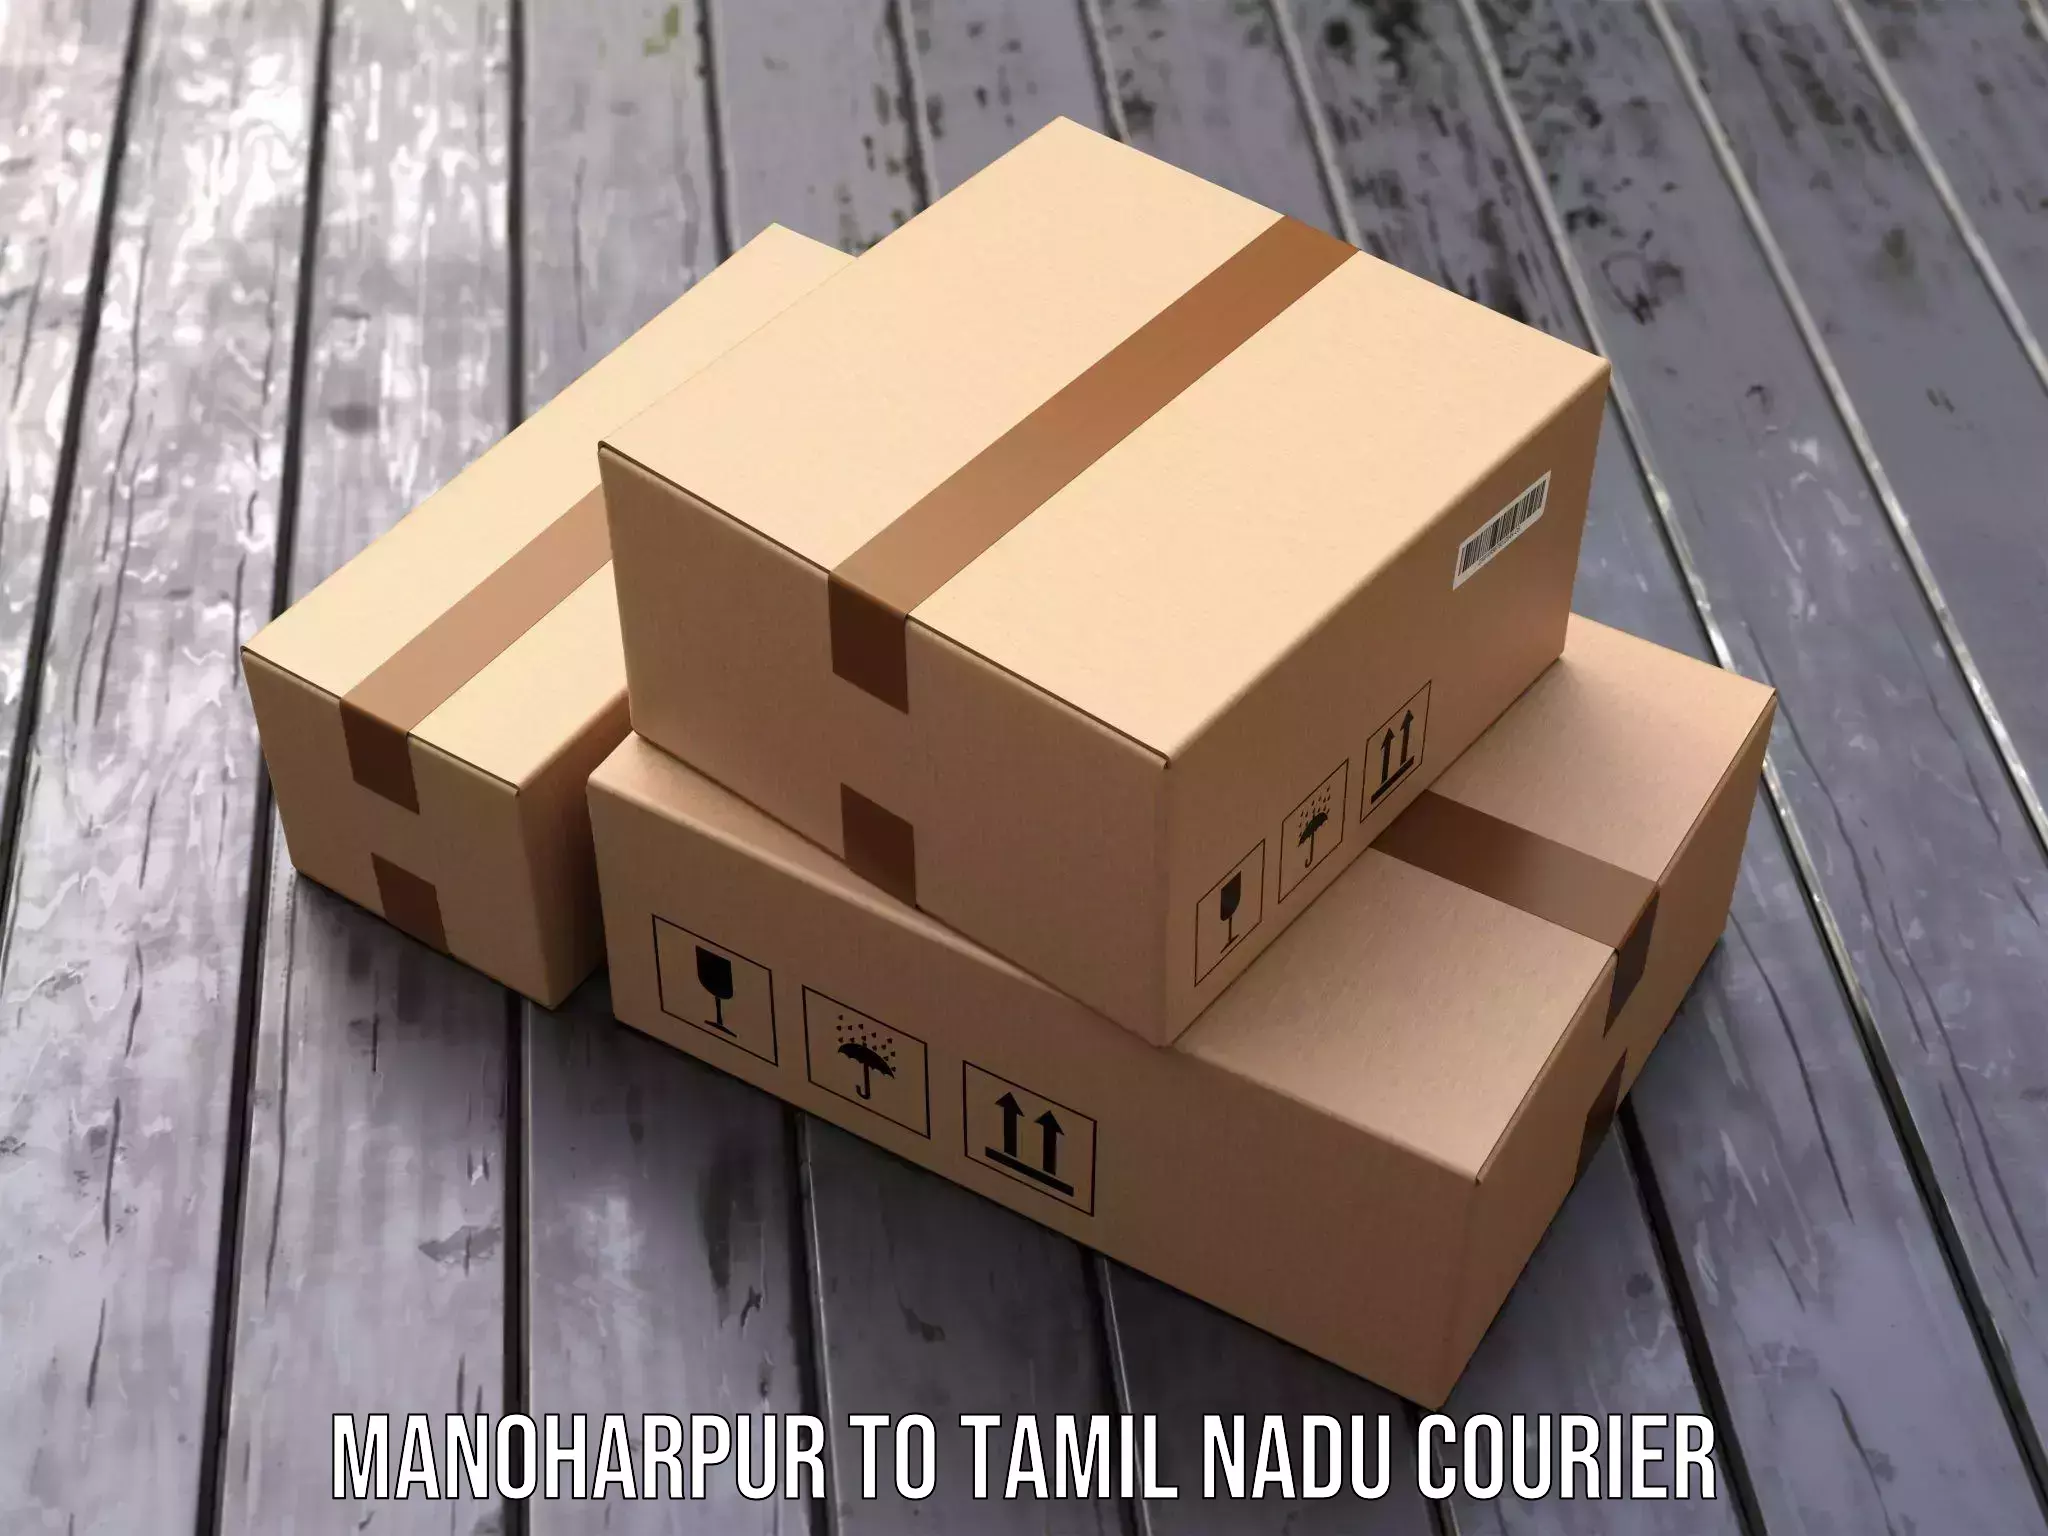 Professional courier handling Manoharpur to Kovilpatti